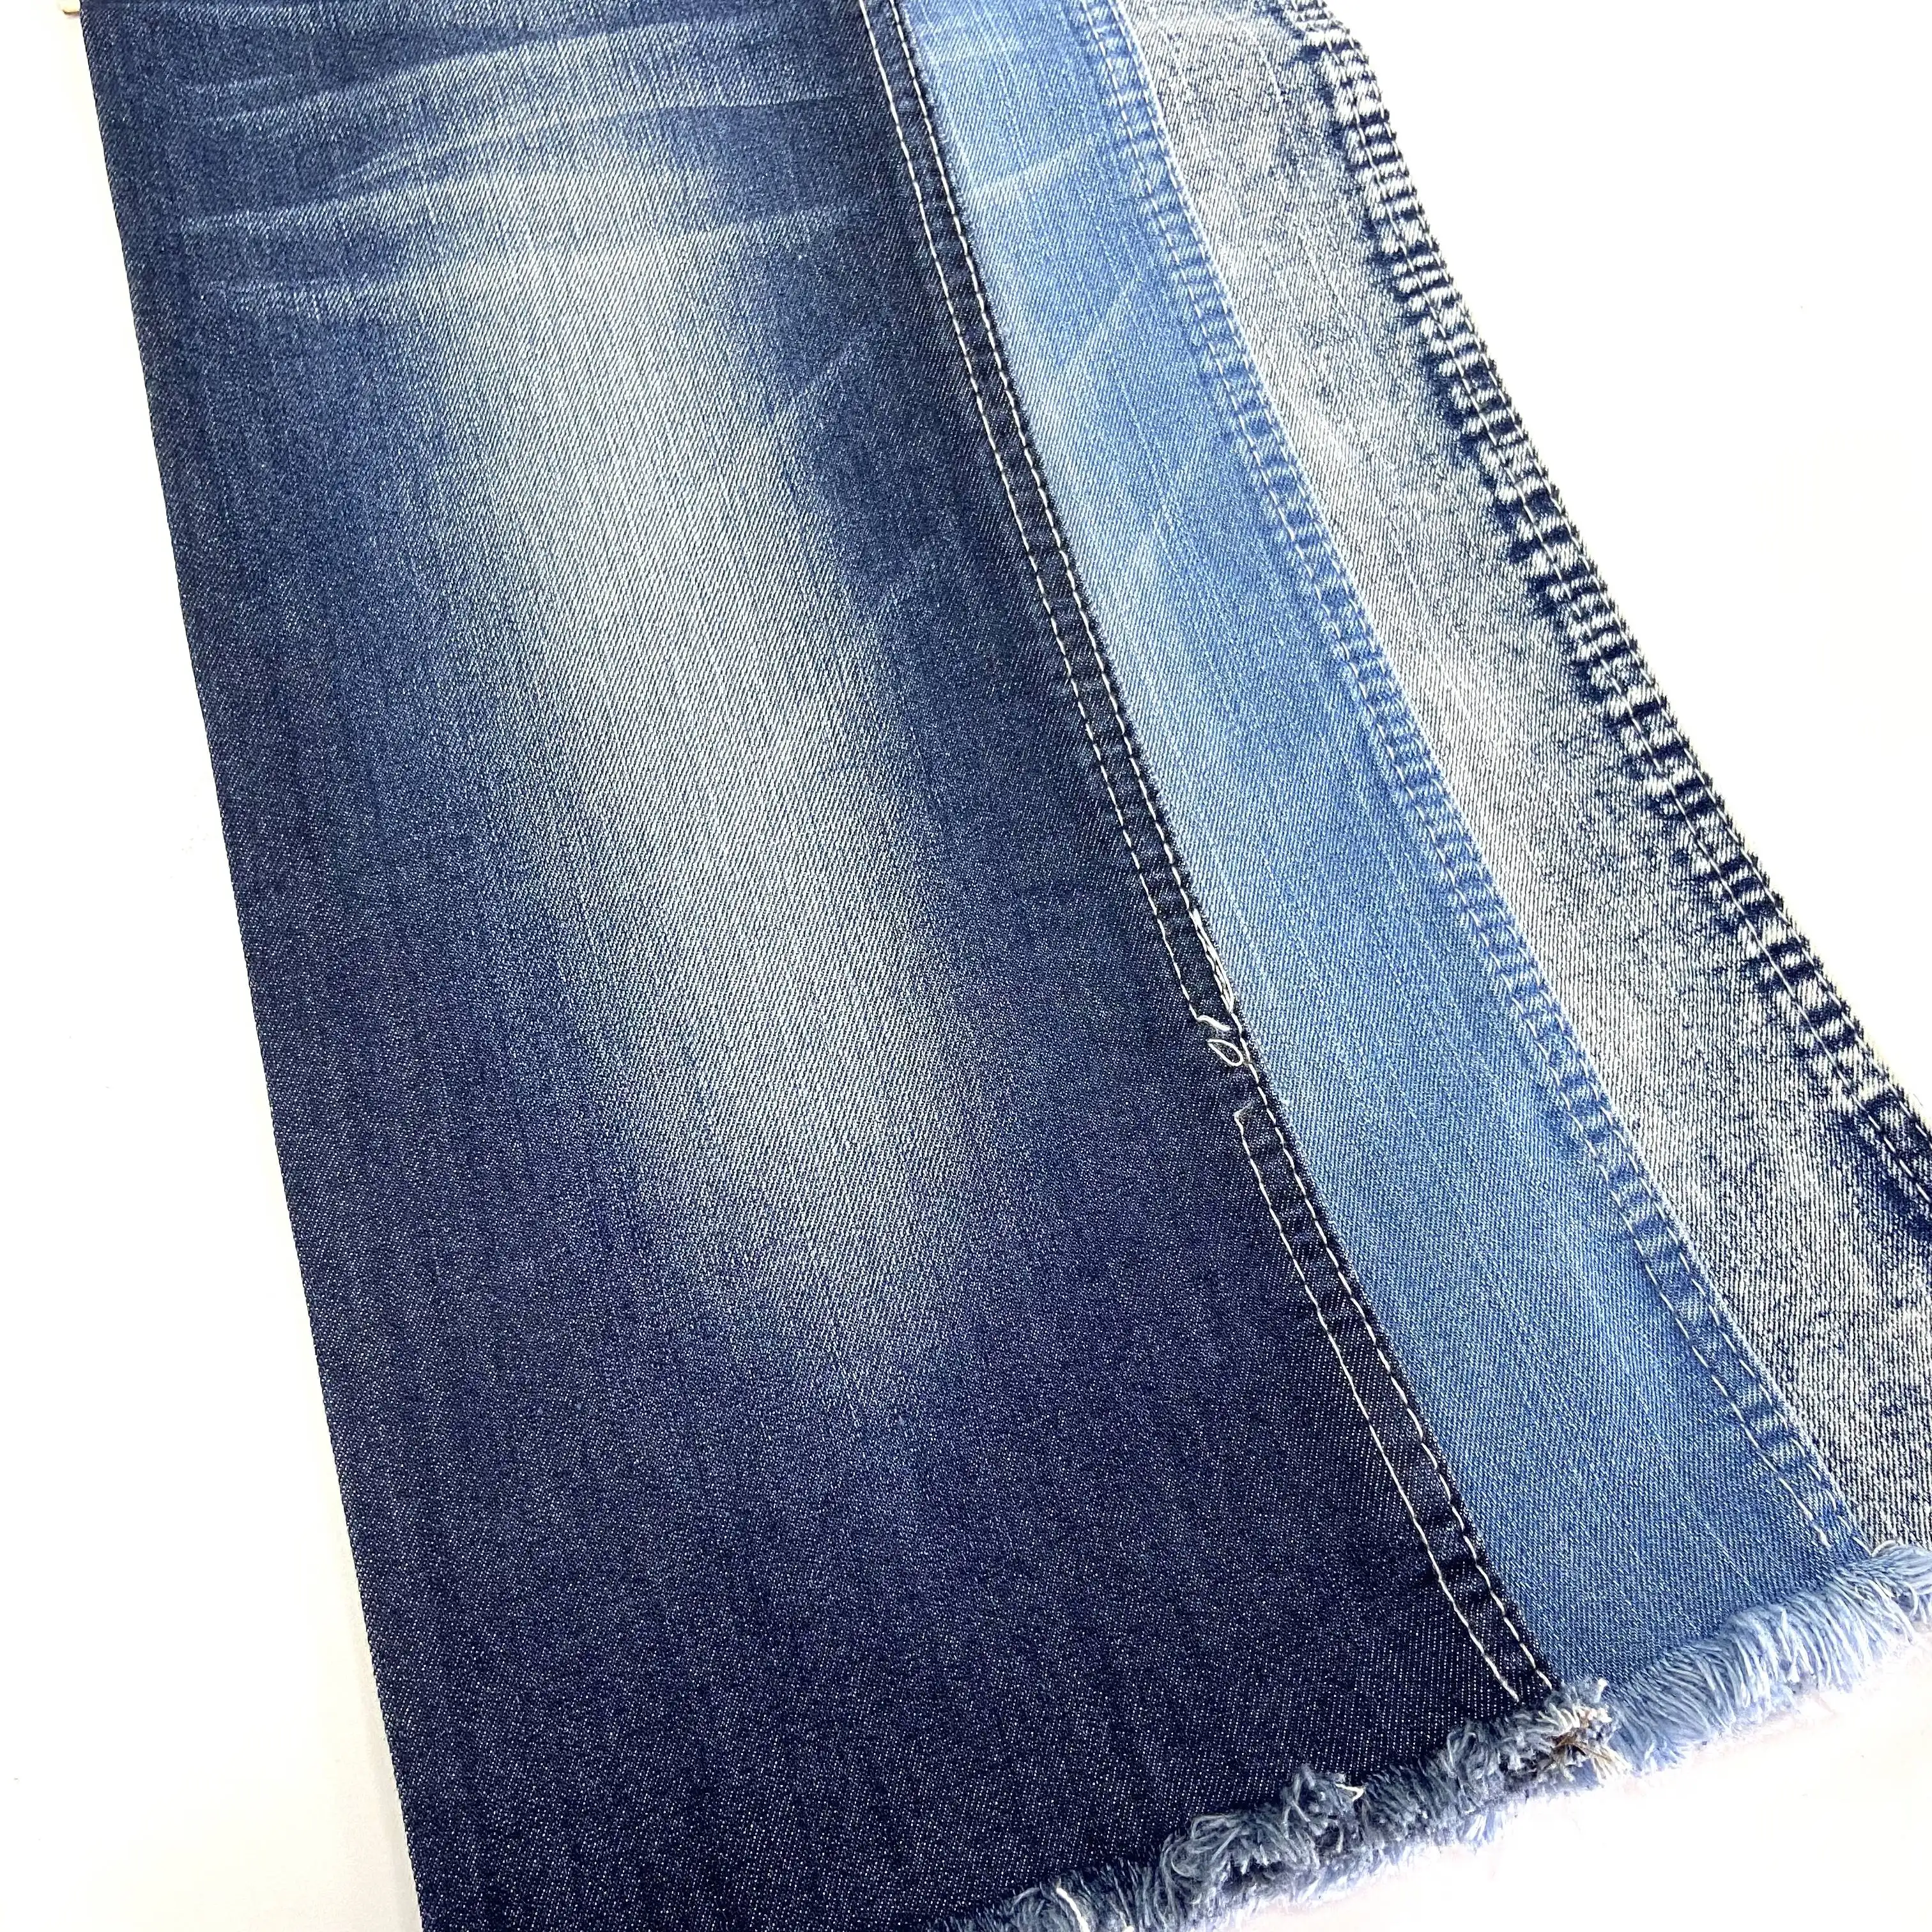 Tessuto in Denim elasticizzato da donna blu cielo di alta qualità per gonne di Jeans